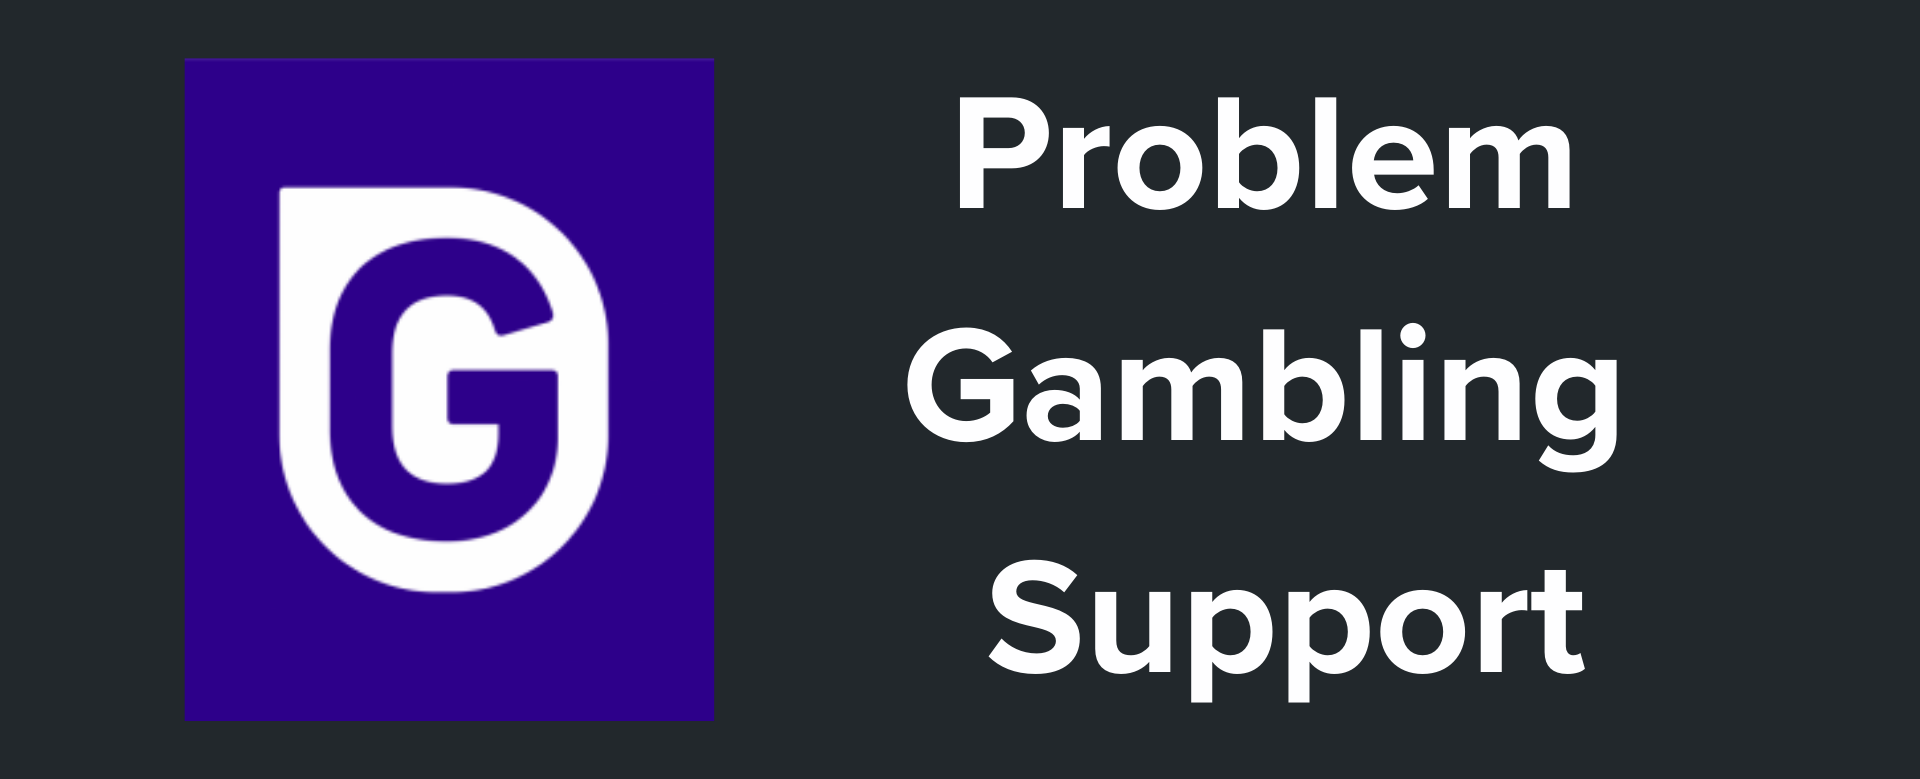 problem gambling support